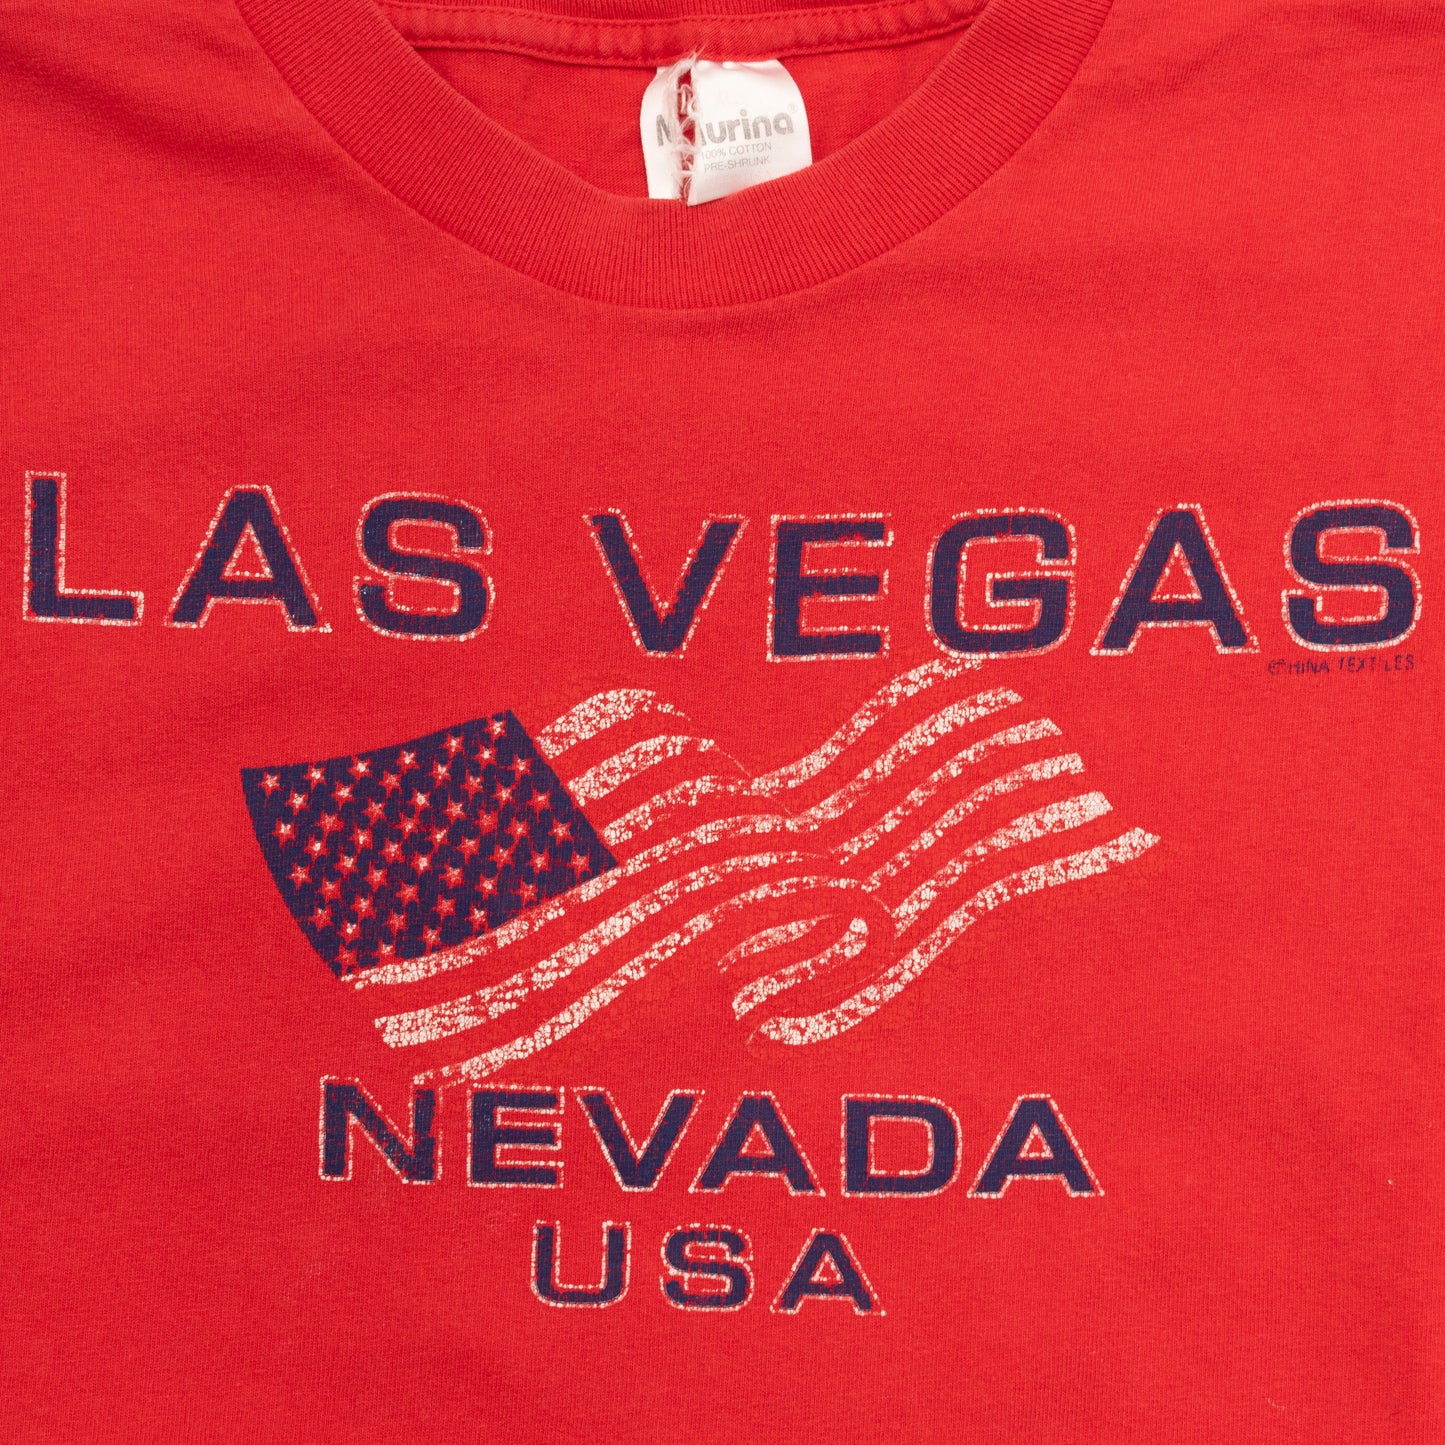 Nevada USA Destination T Shirt, L